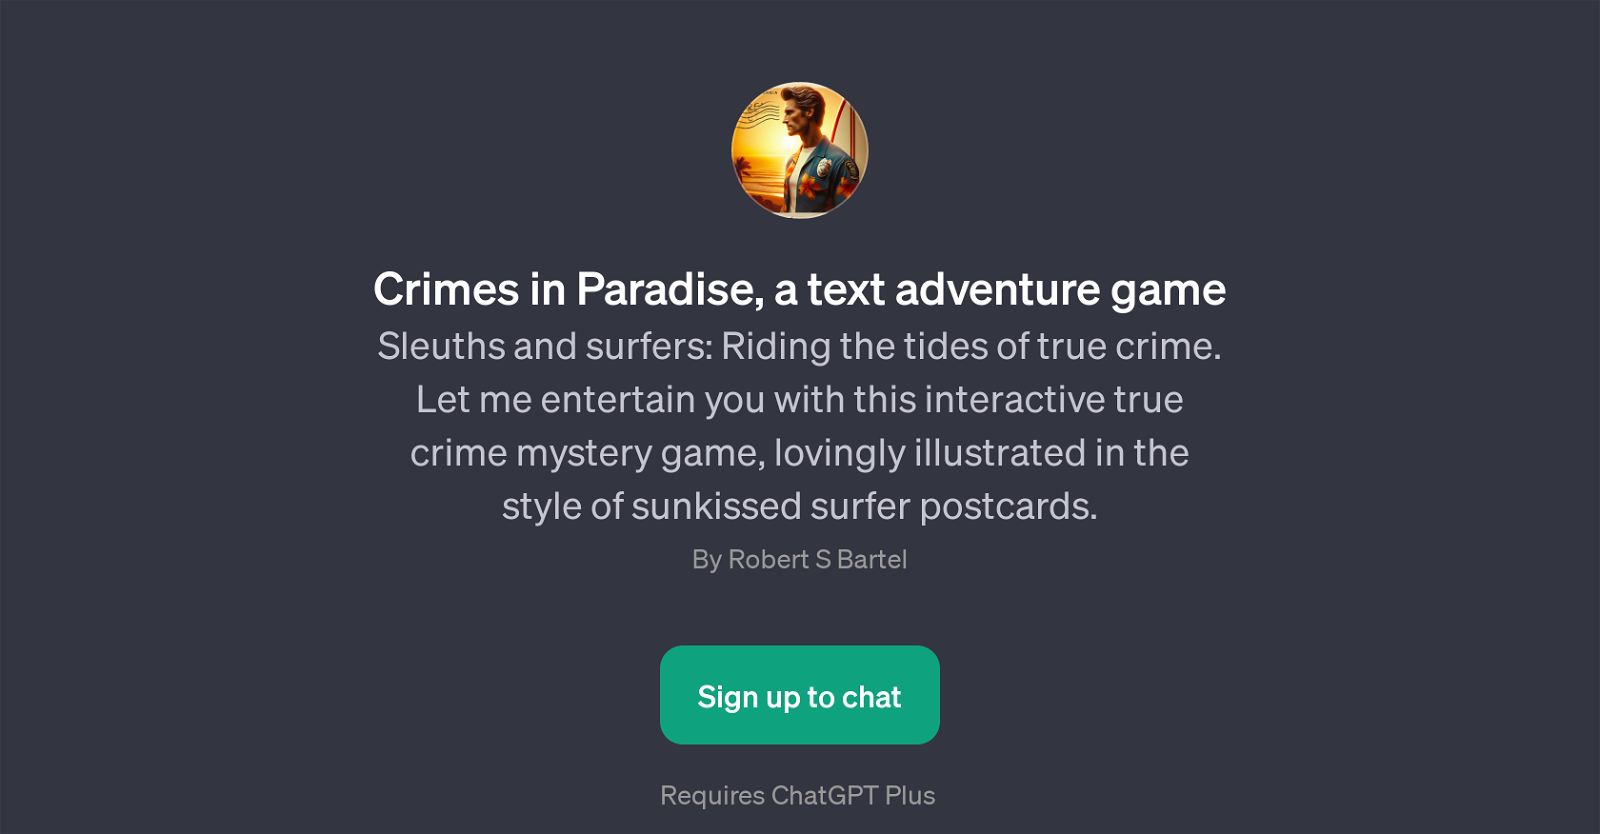 Crimes in Paradise website